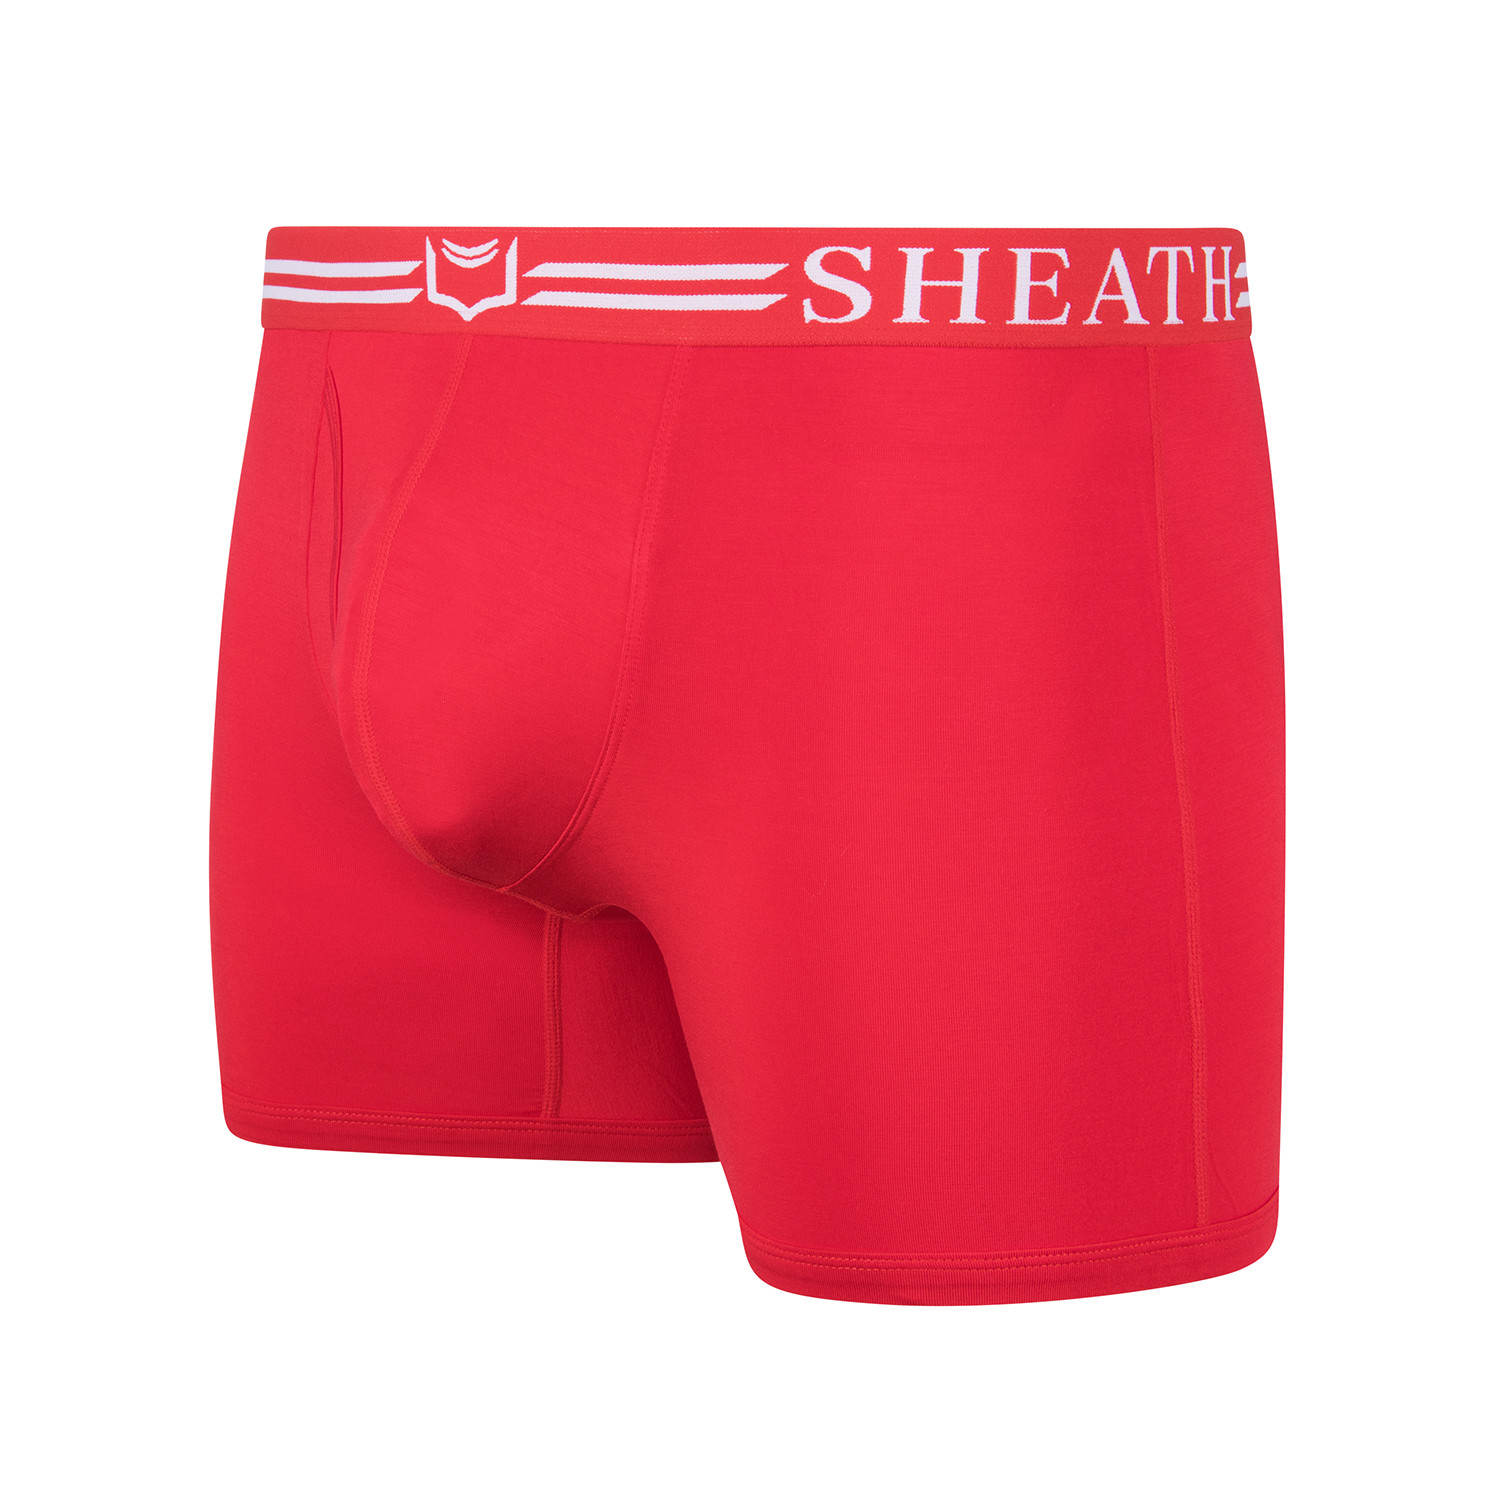 SHEATH 4.0 Men's Dual Pouch Boxer Brief // Red + White (S) - Sheath ...